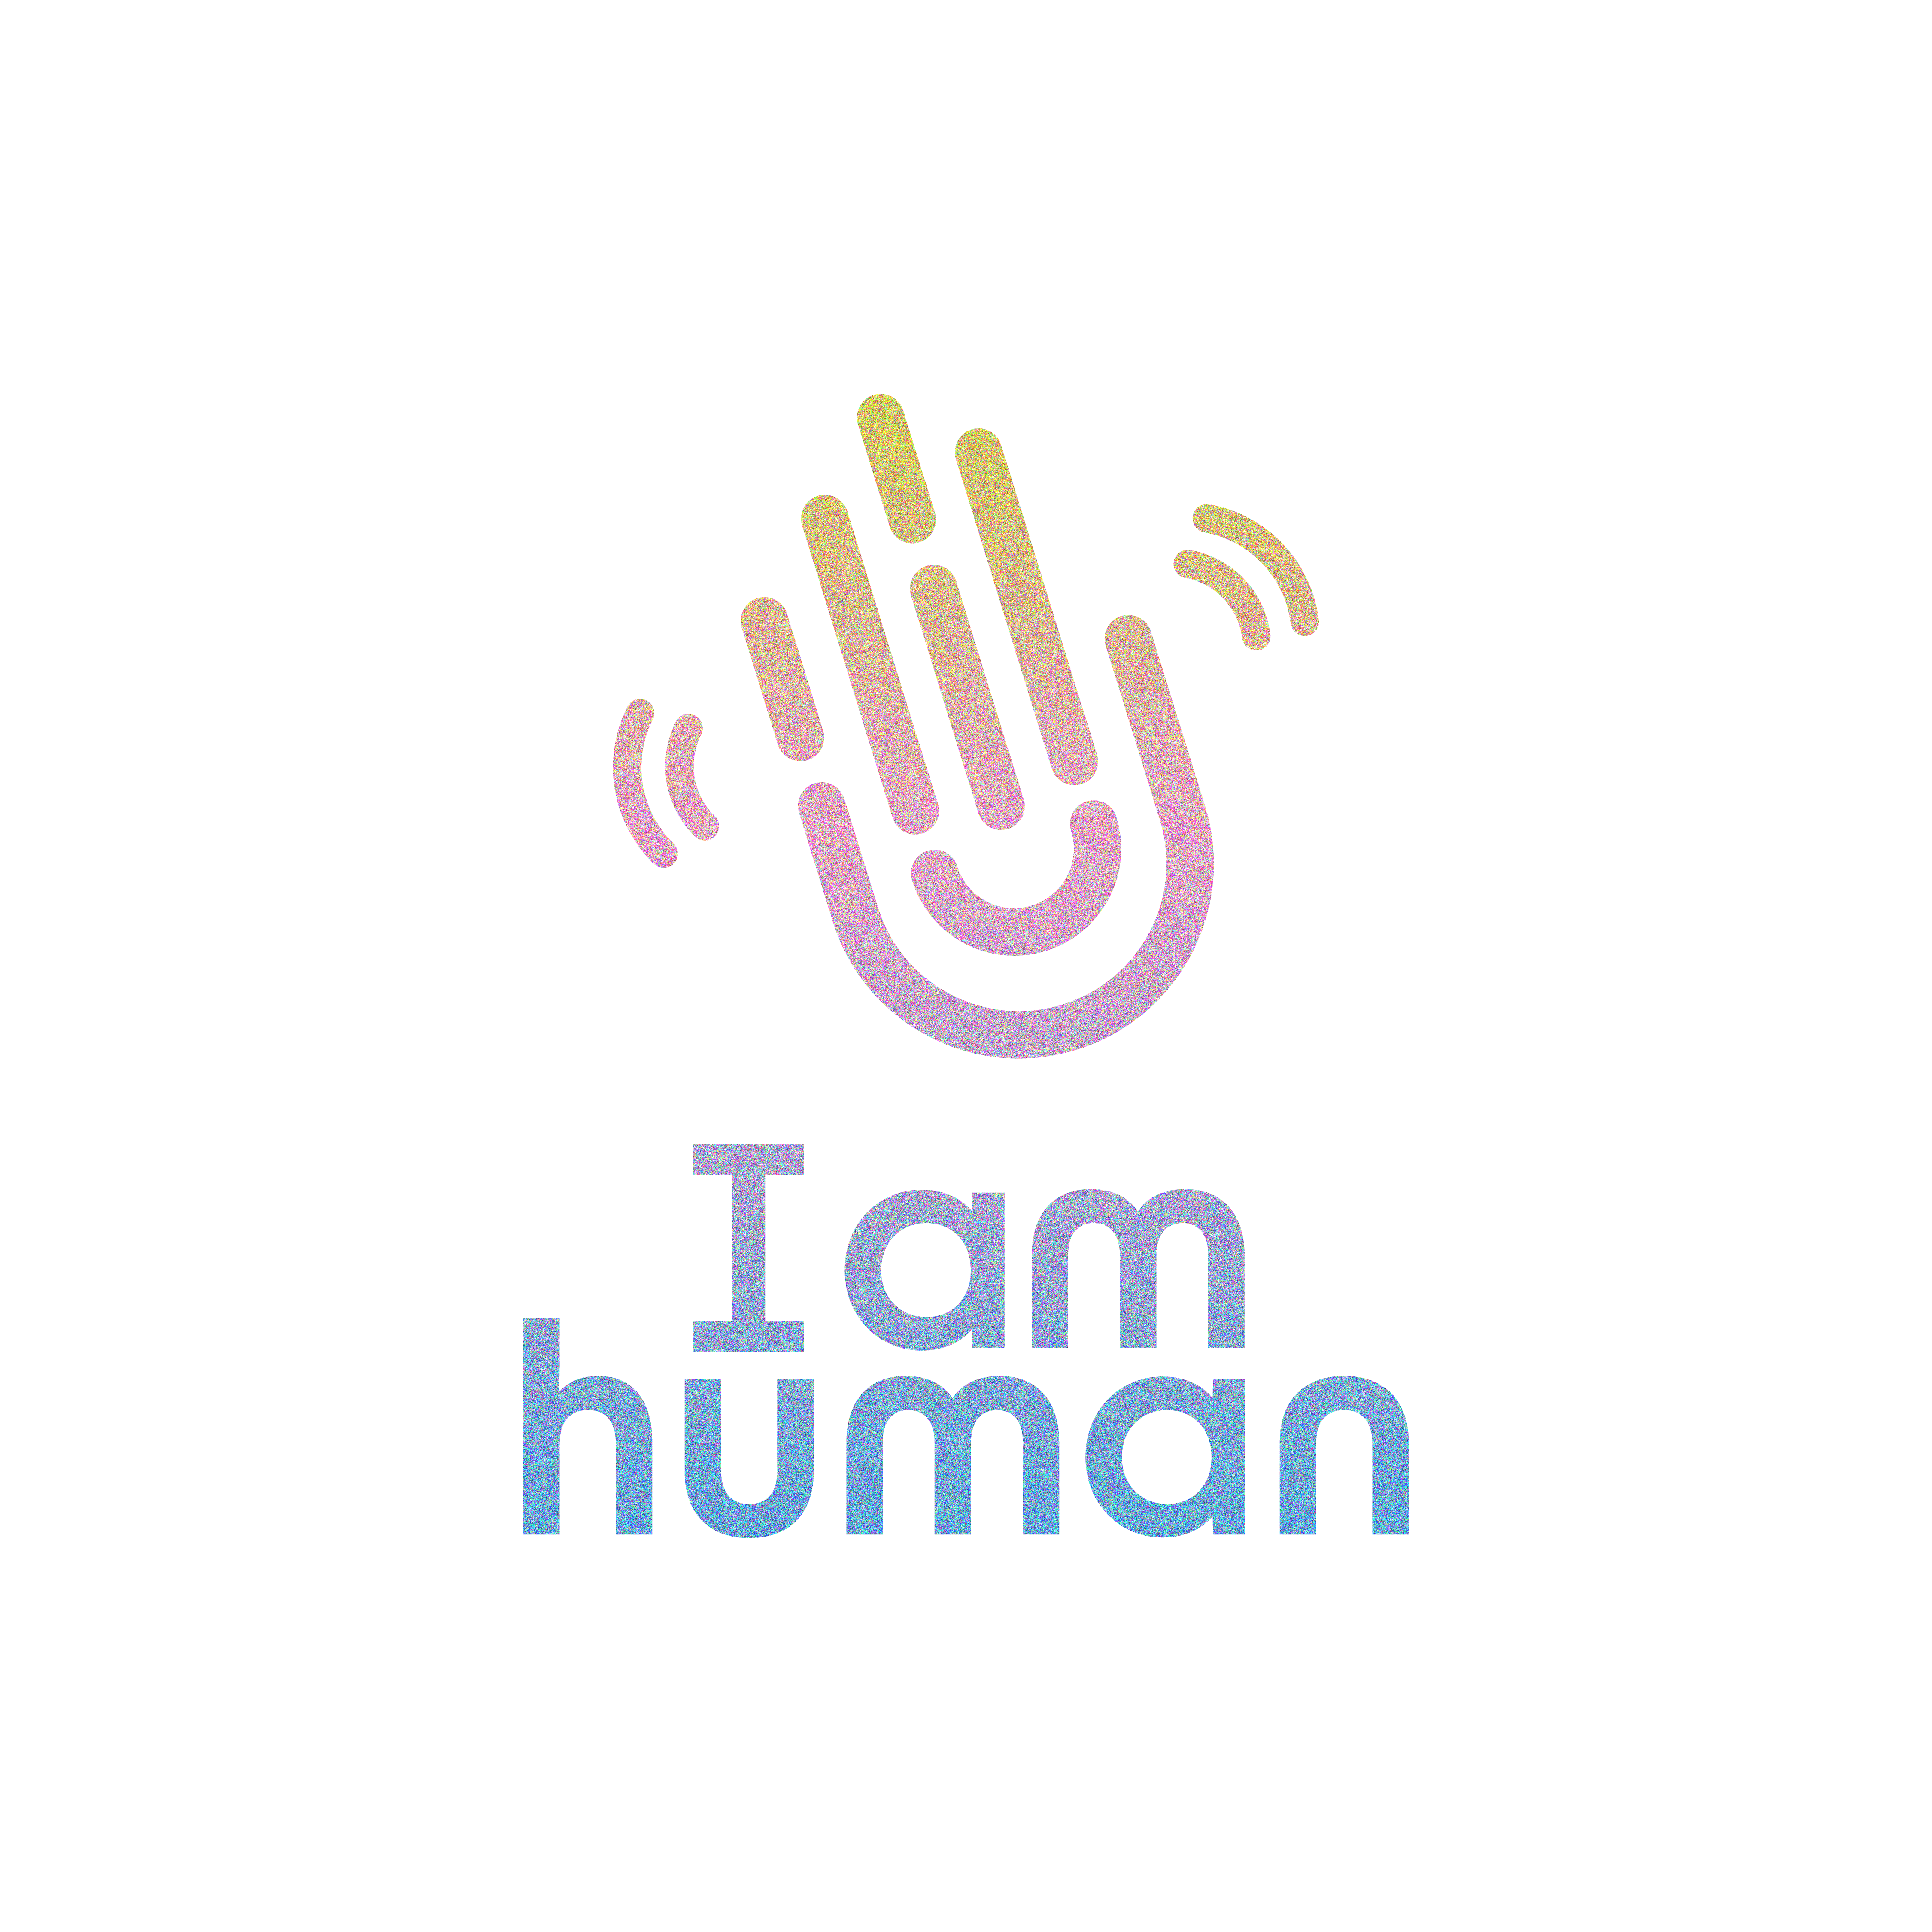 I-AM-HUMAN logo